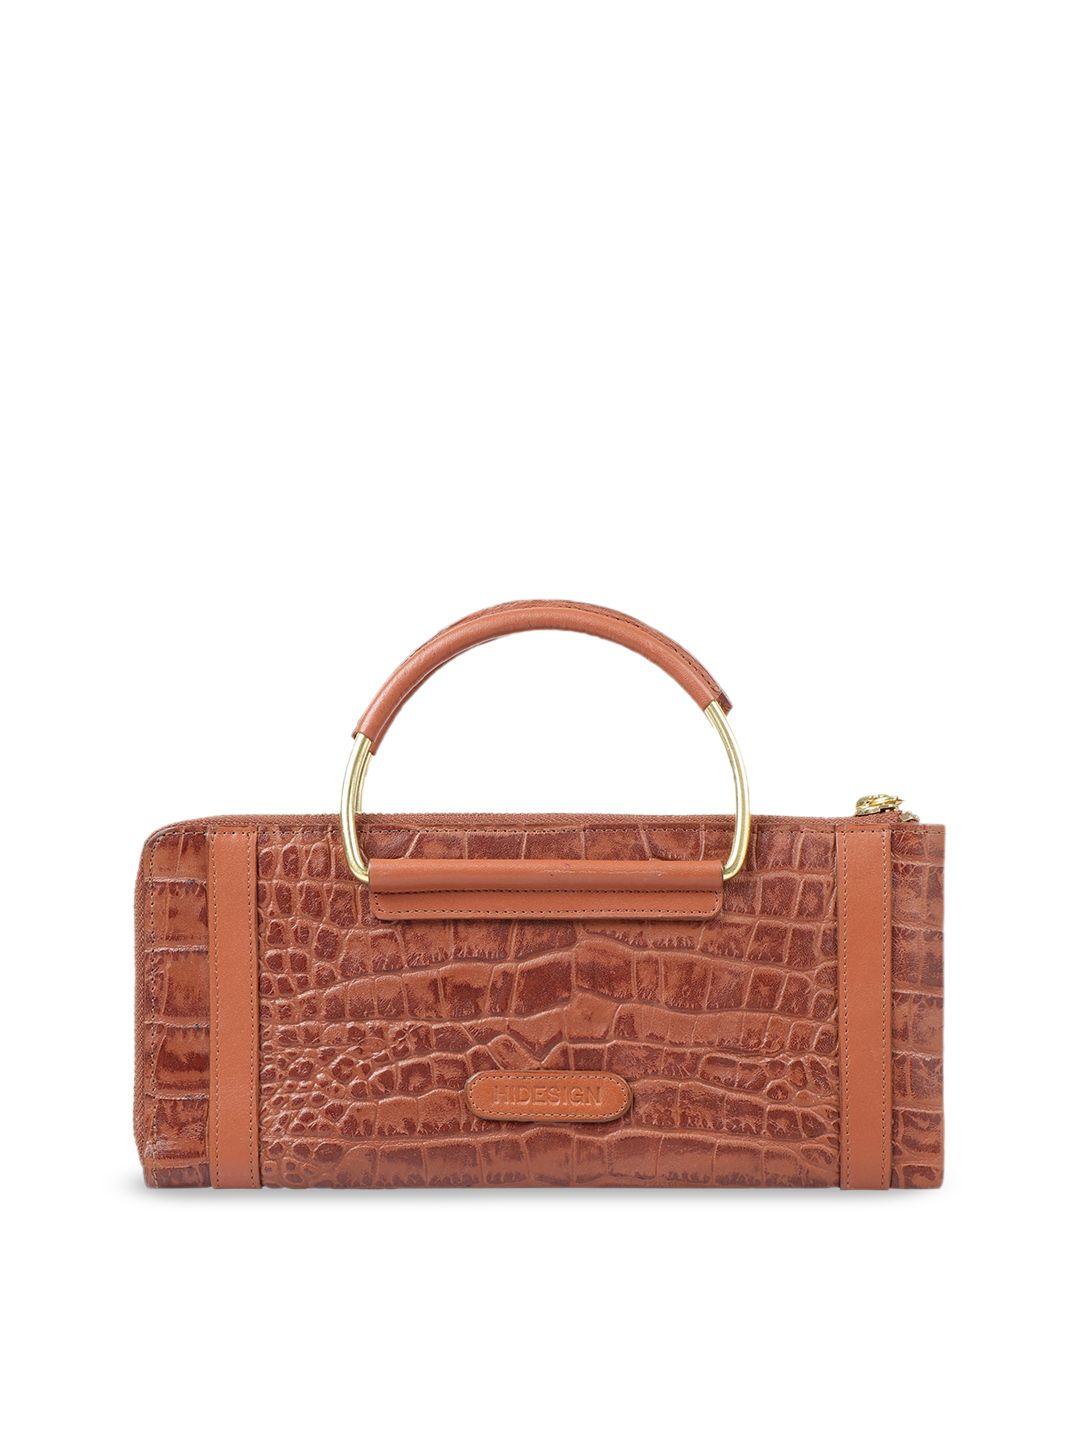 hidesign-tan-textured-purse-clutch